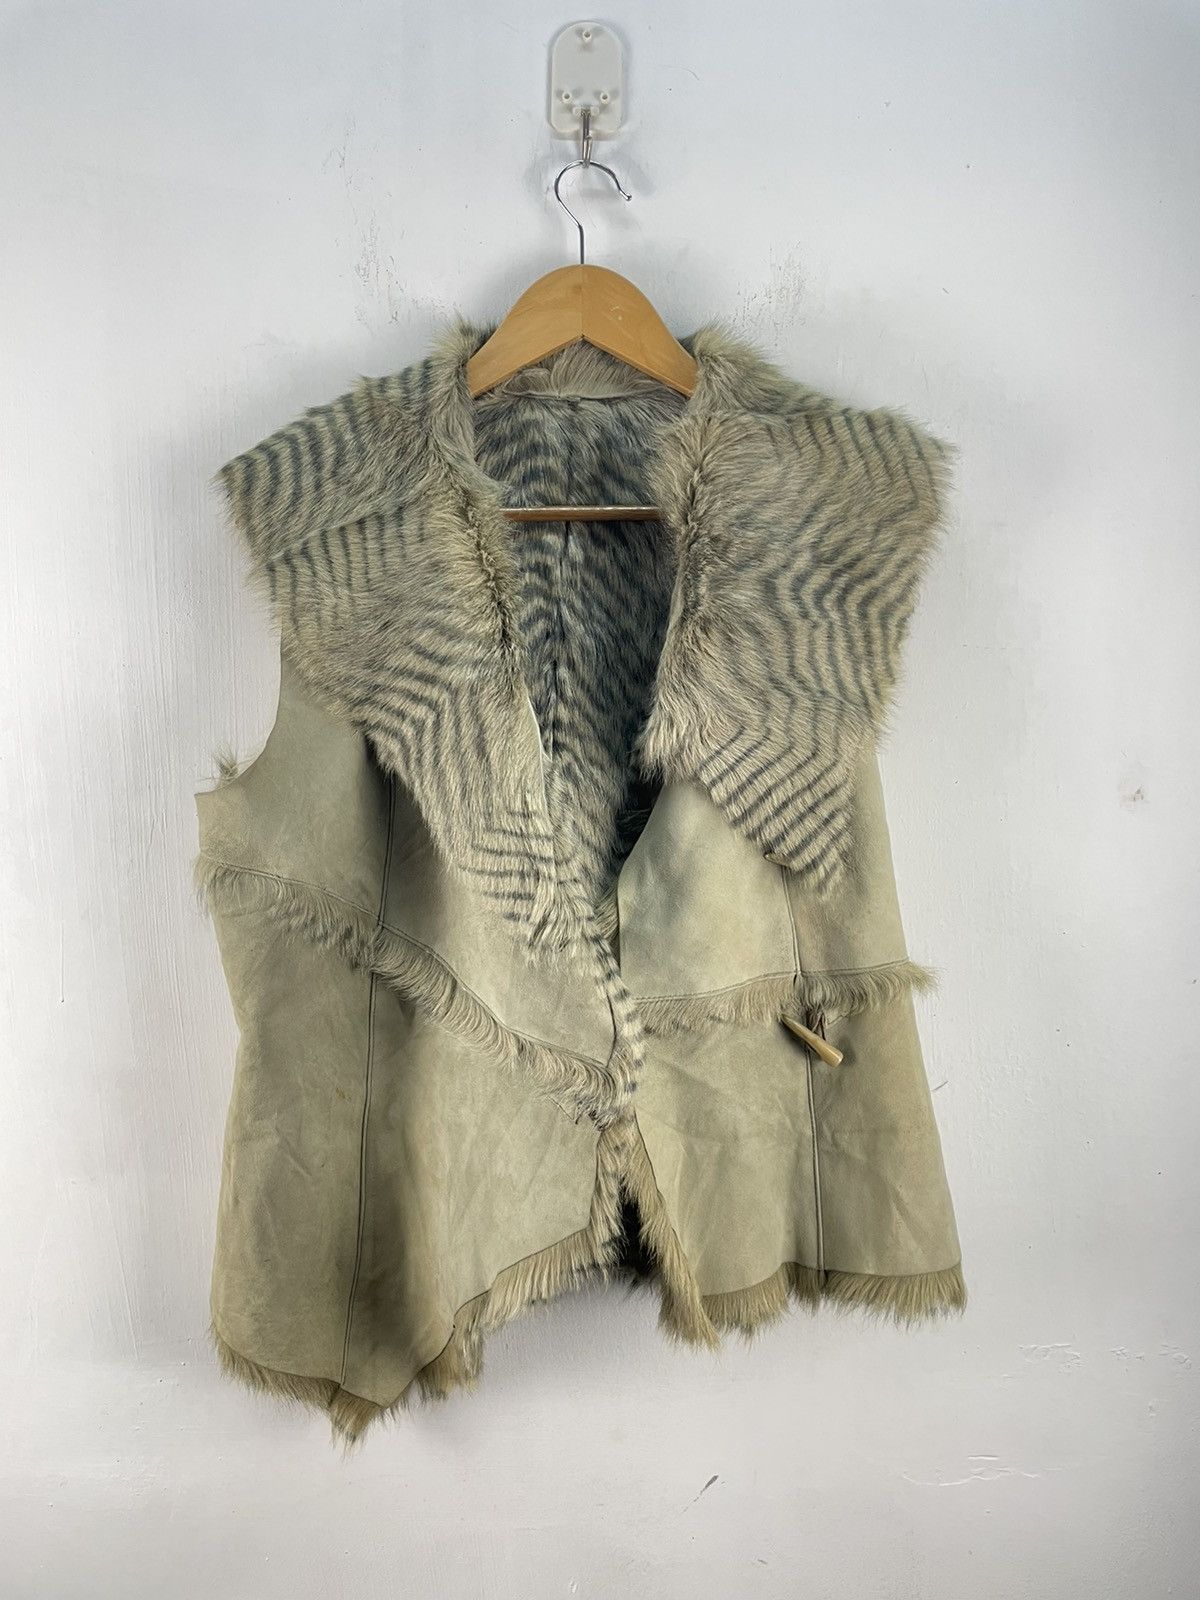 Japanese Brand Vintage Fur Goat Sheepskin Patchwork Vest Jacket Size US M / EU 48-50 / 2 - 3 Thumbnail